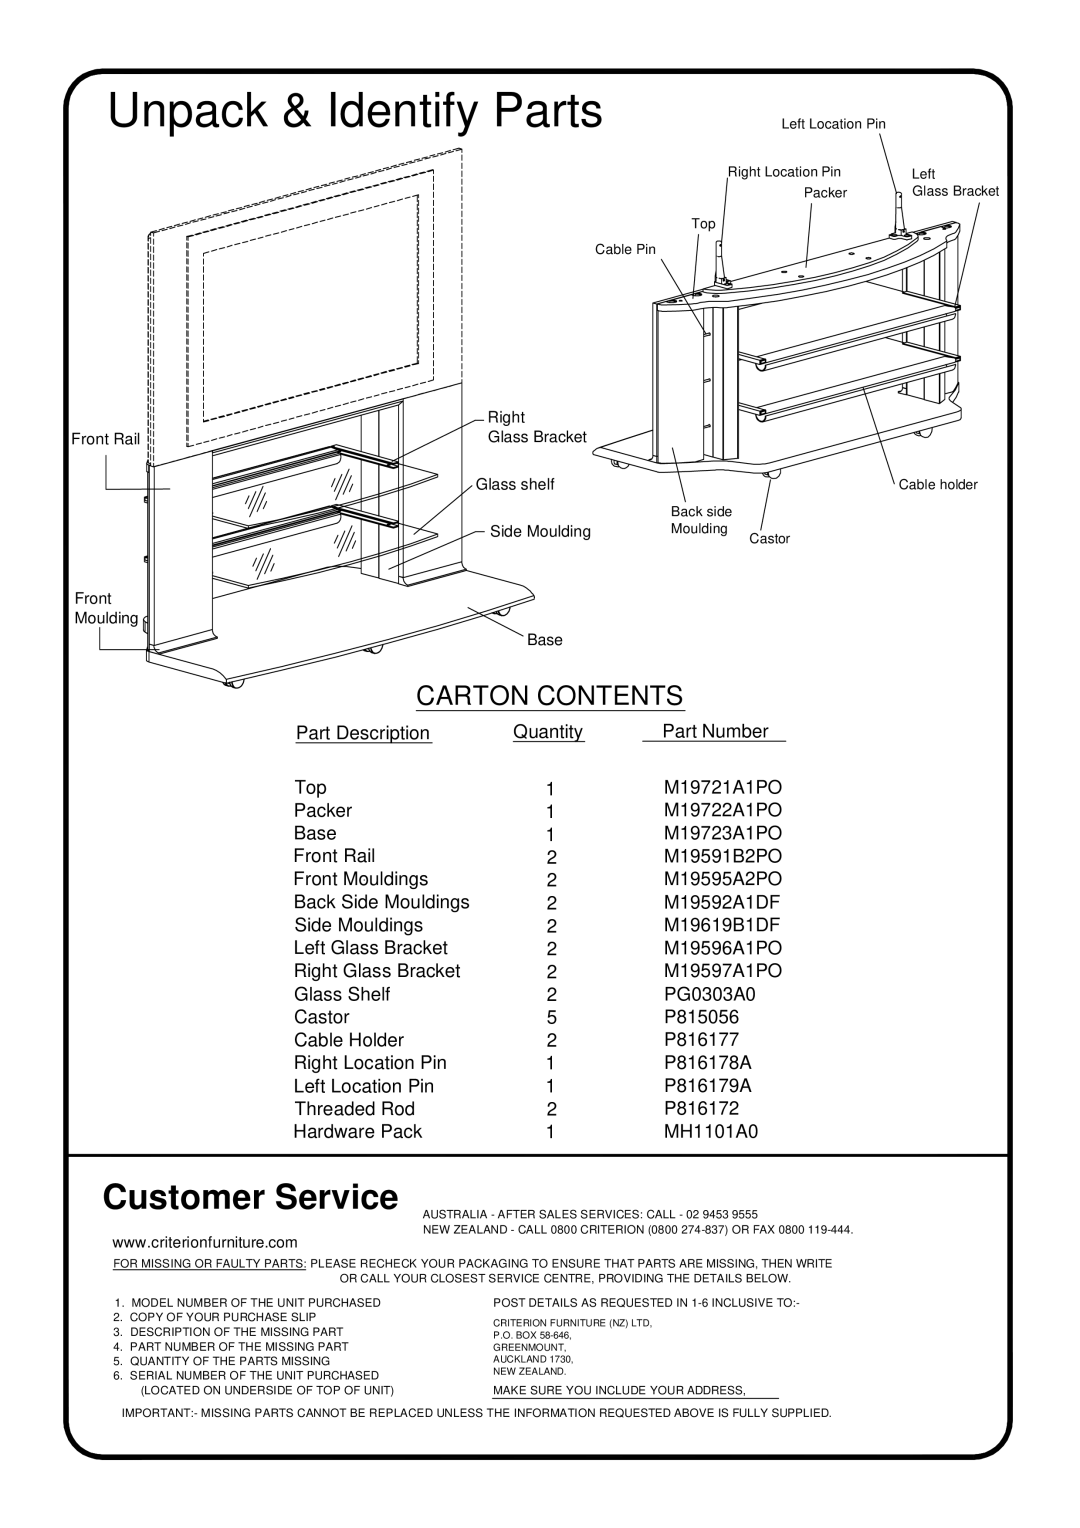 Panasonic TY-42PV30NZ manual Unpack & Identify Parts, Customer Service, Carton Contents 